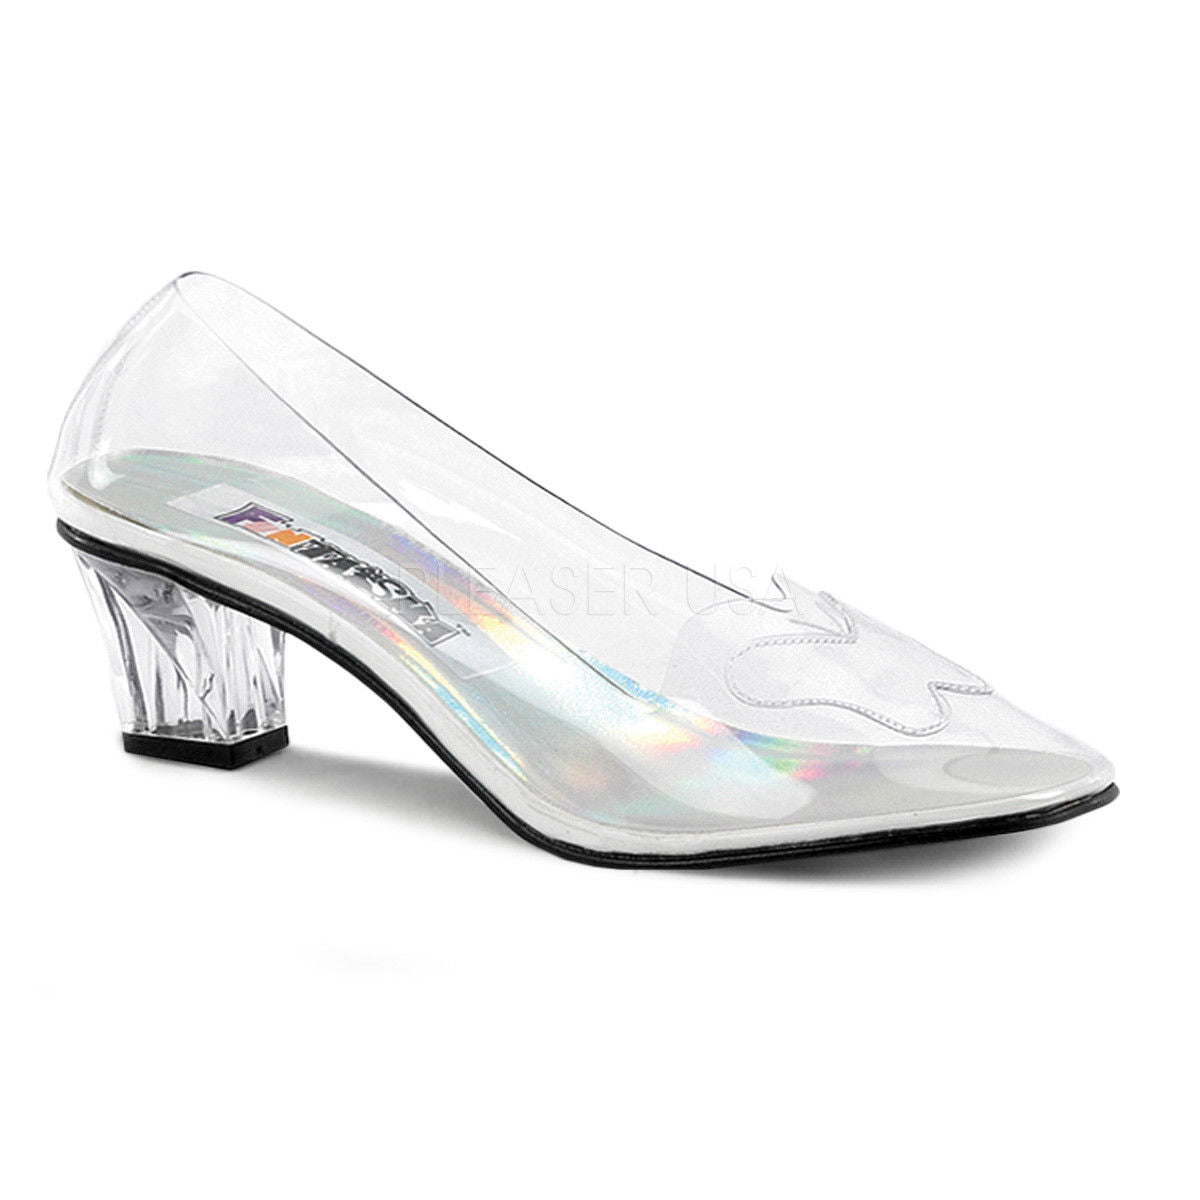 FUNTASMA Crystal-103 Costume Halloween Cinderella Glass Slippers 2" Heels Shoes - A Shoe Addiction